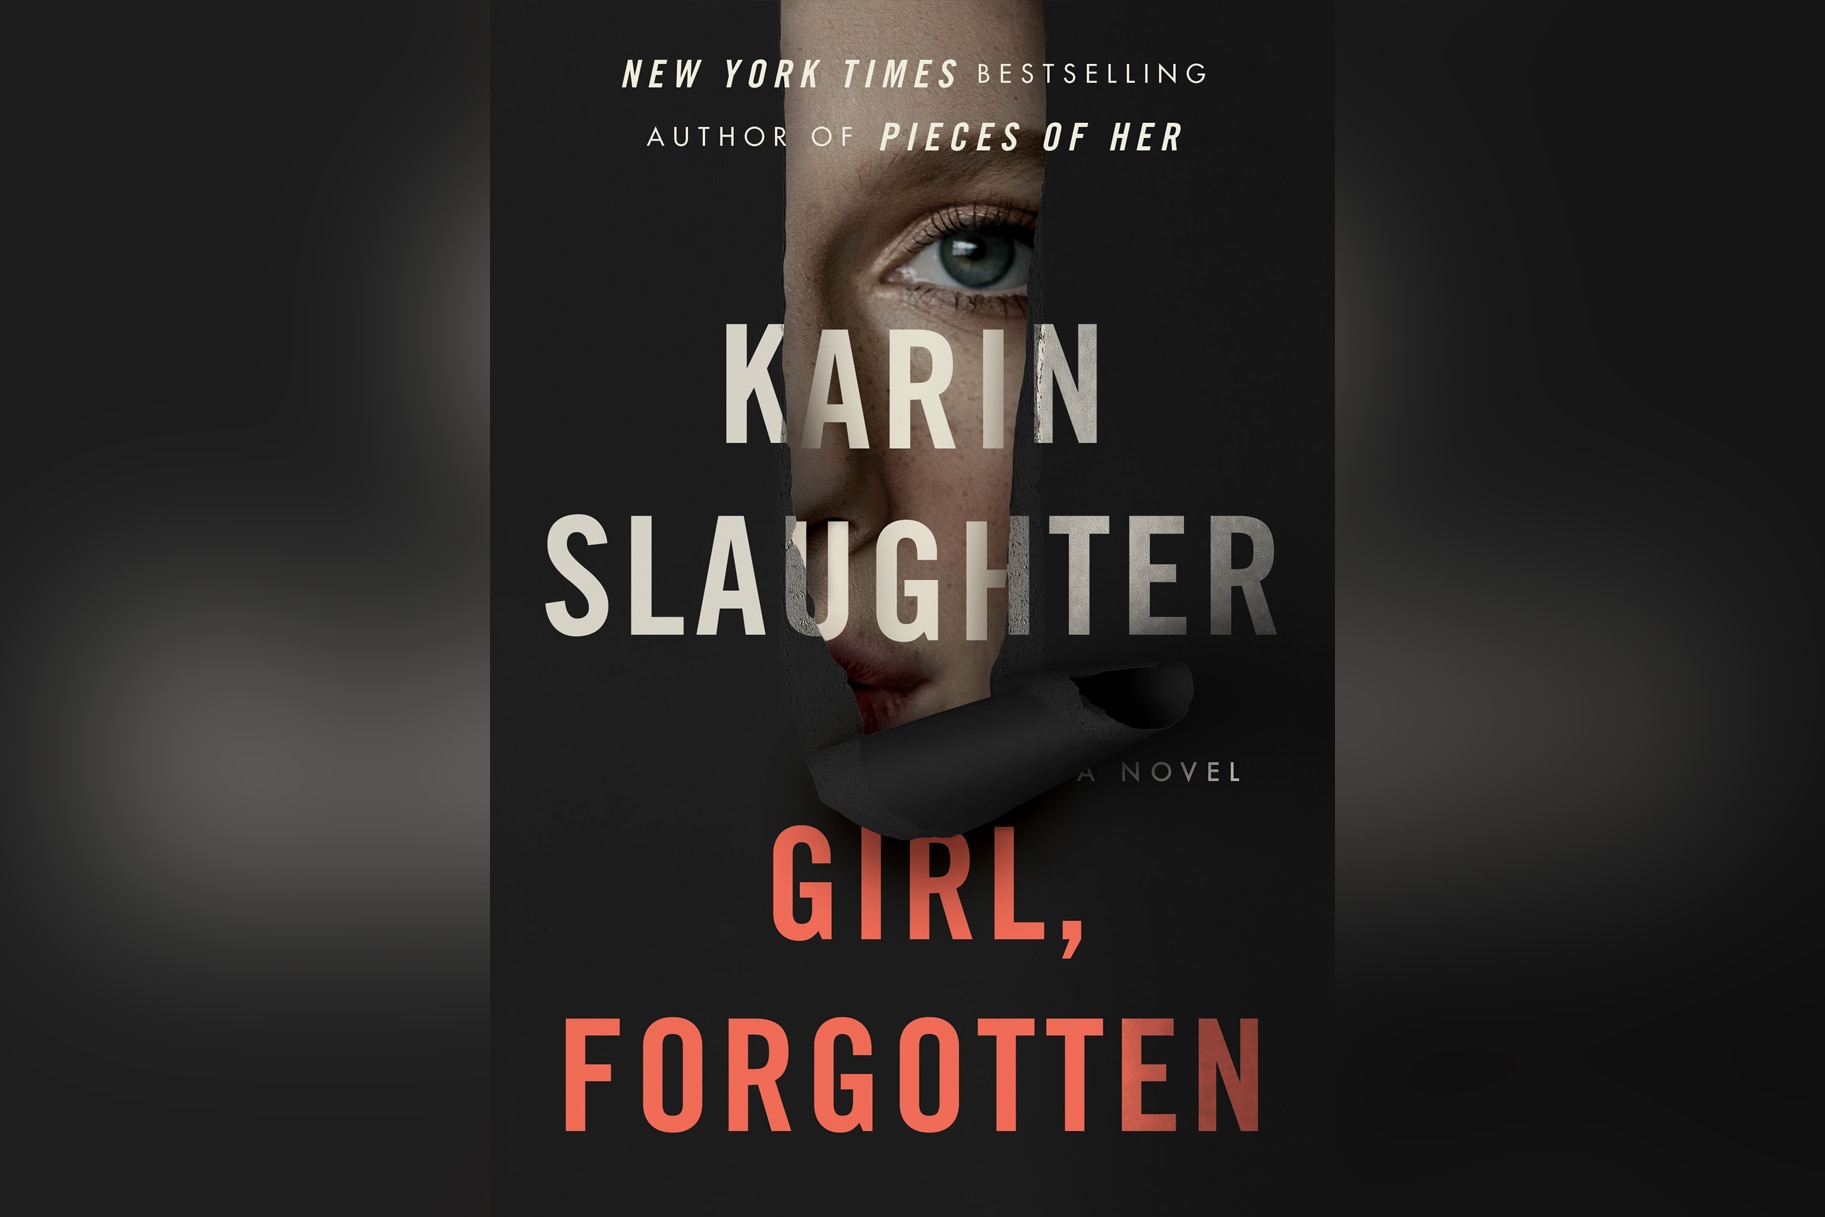 The cover of Girl, Forgotten by Karin Slaughter